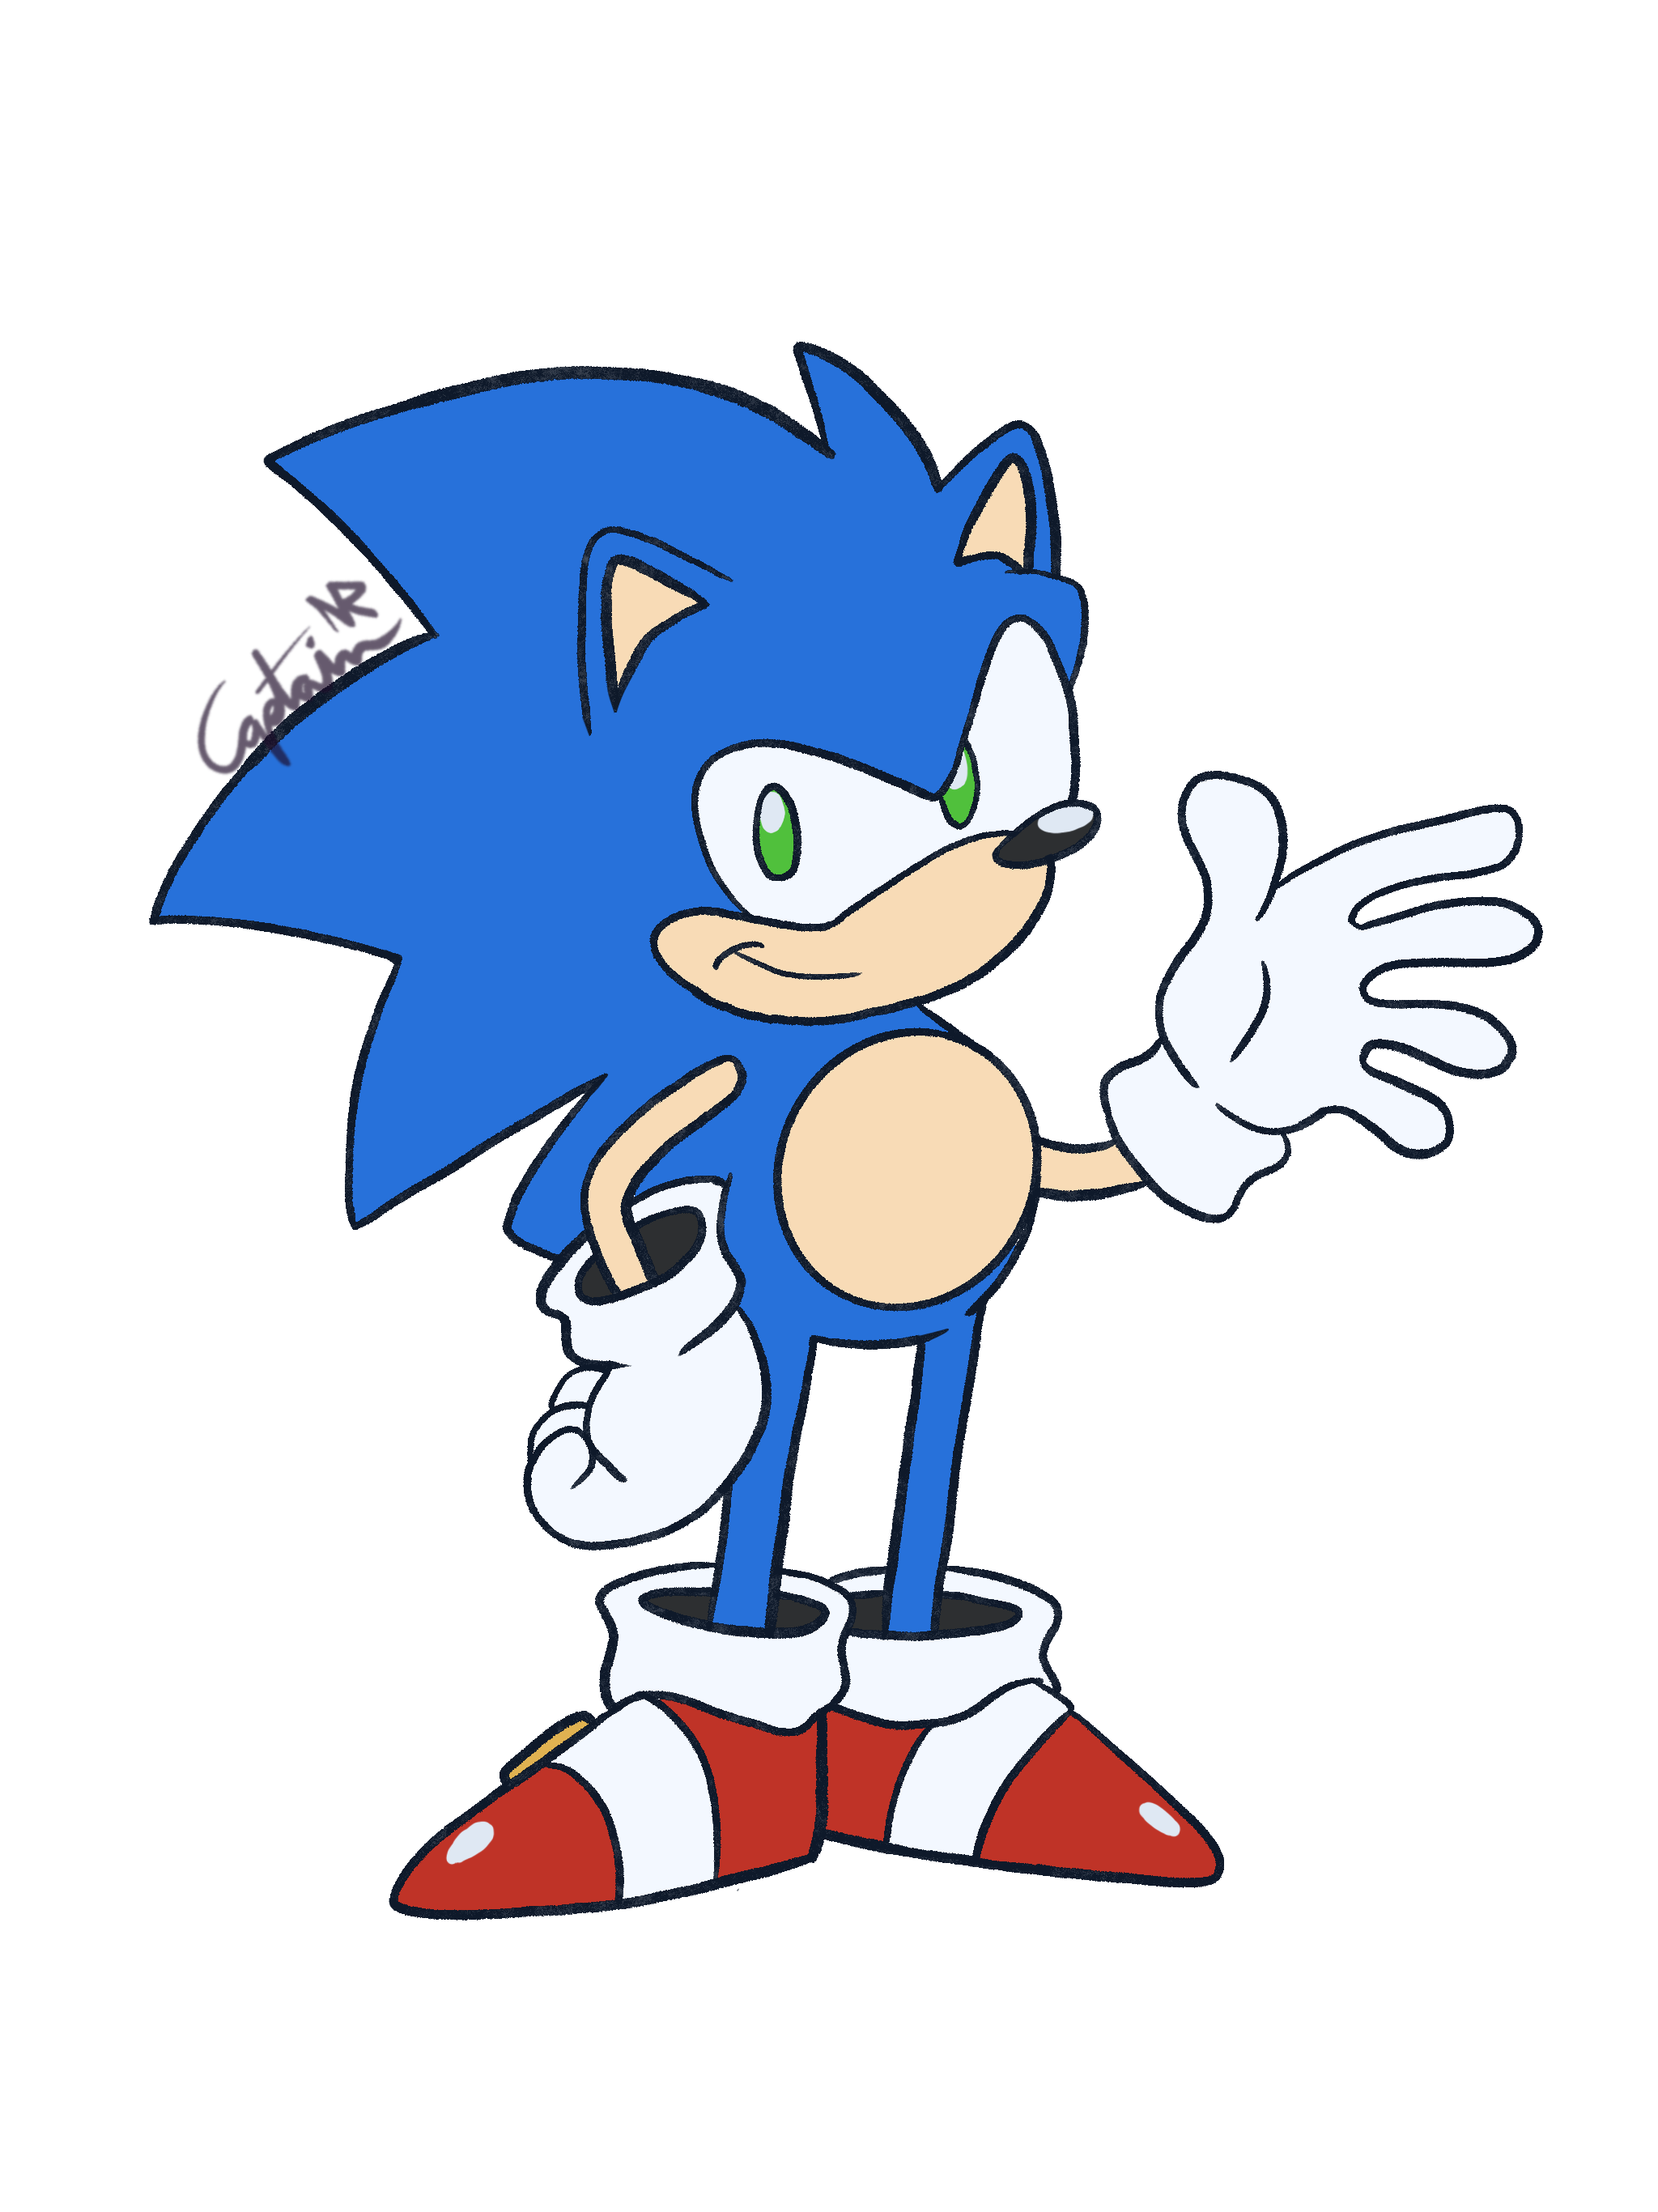 Sonic The Hedgehog fanart